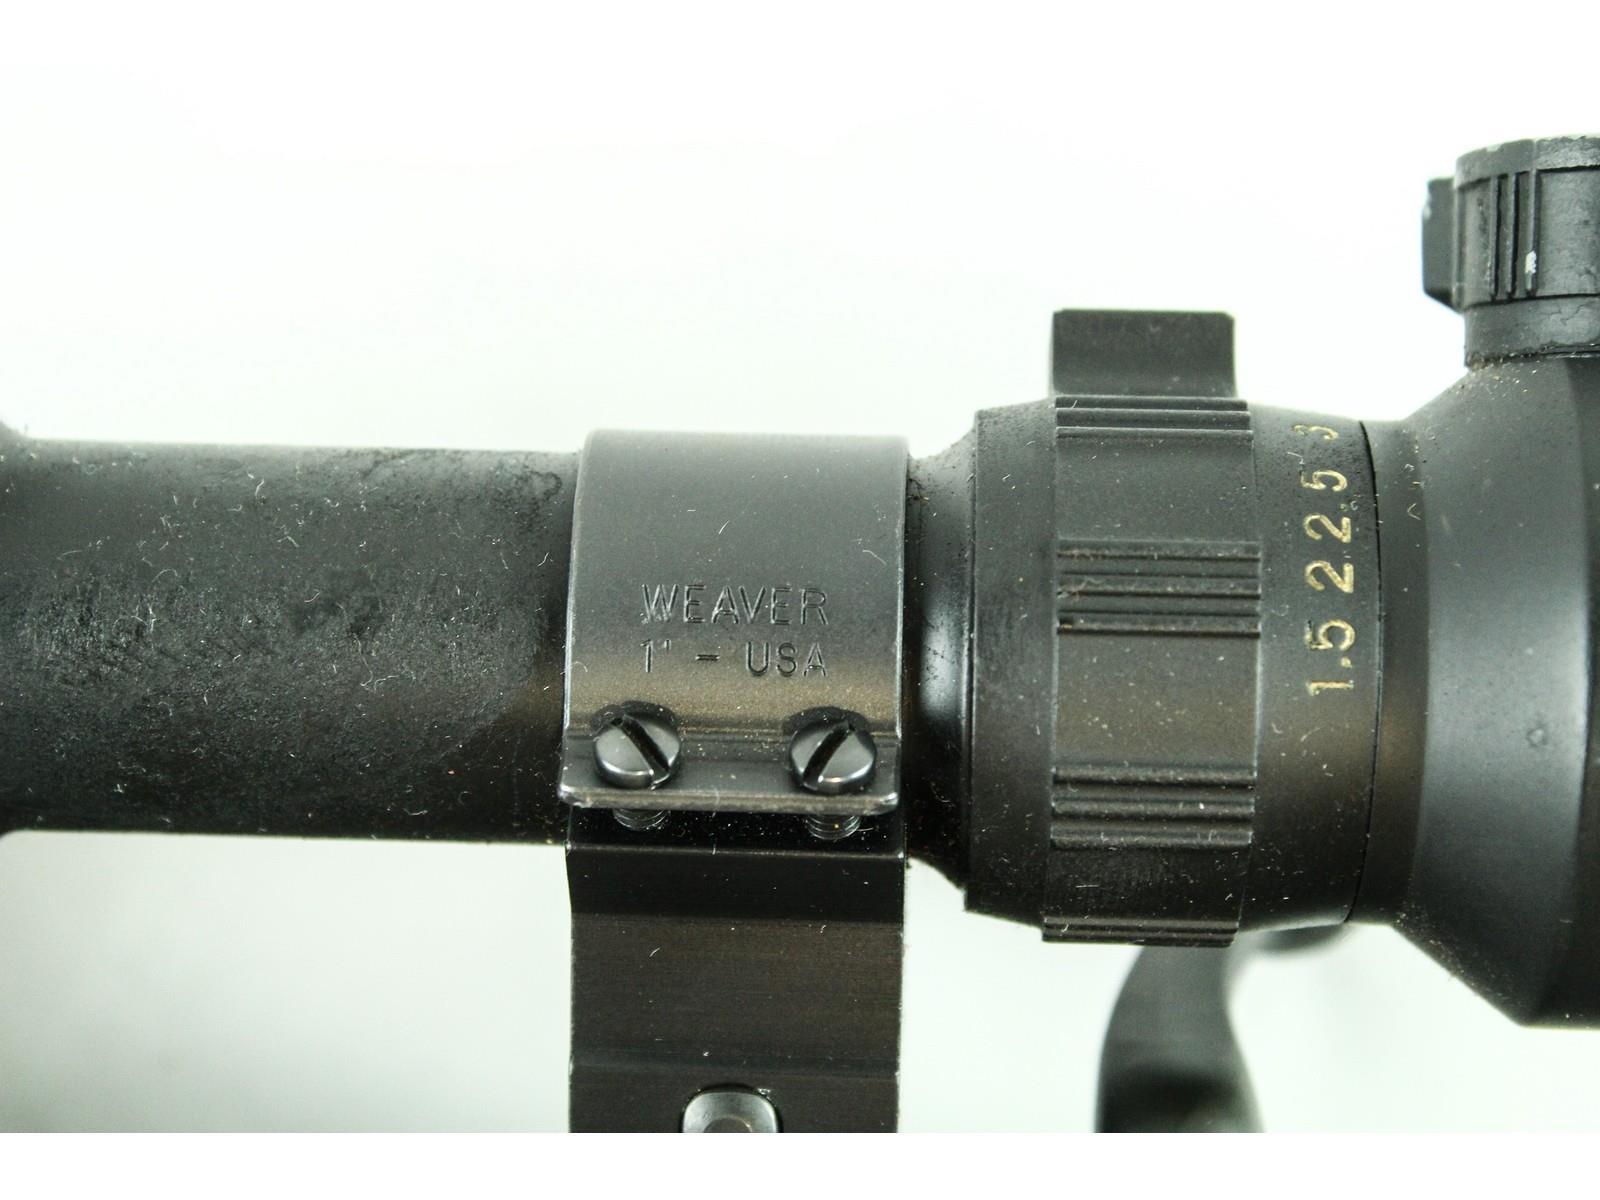 Mossberg Model 695 12 Gauge Shotgun w/ Scope